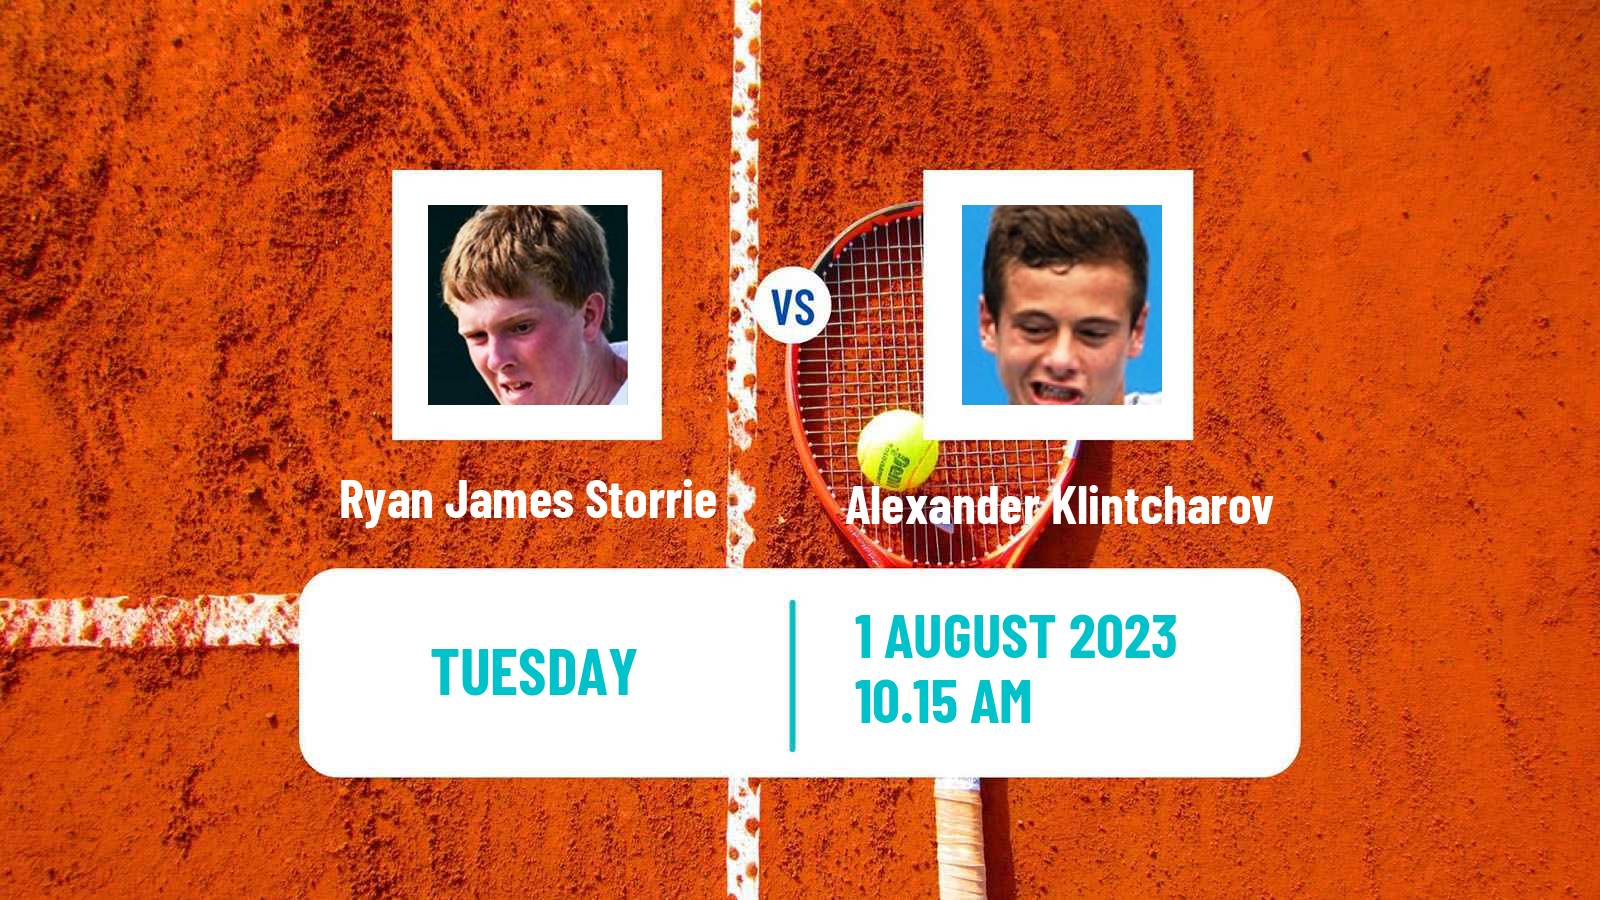 Tennis ITF M25 Roehampton 3 Men Ryan James Storrie - Alexander Klintcharov